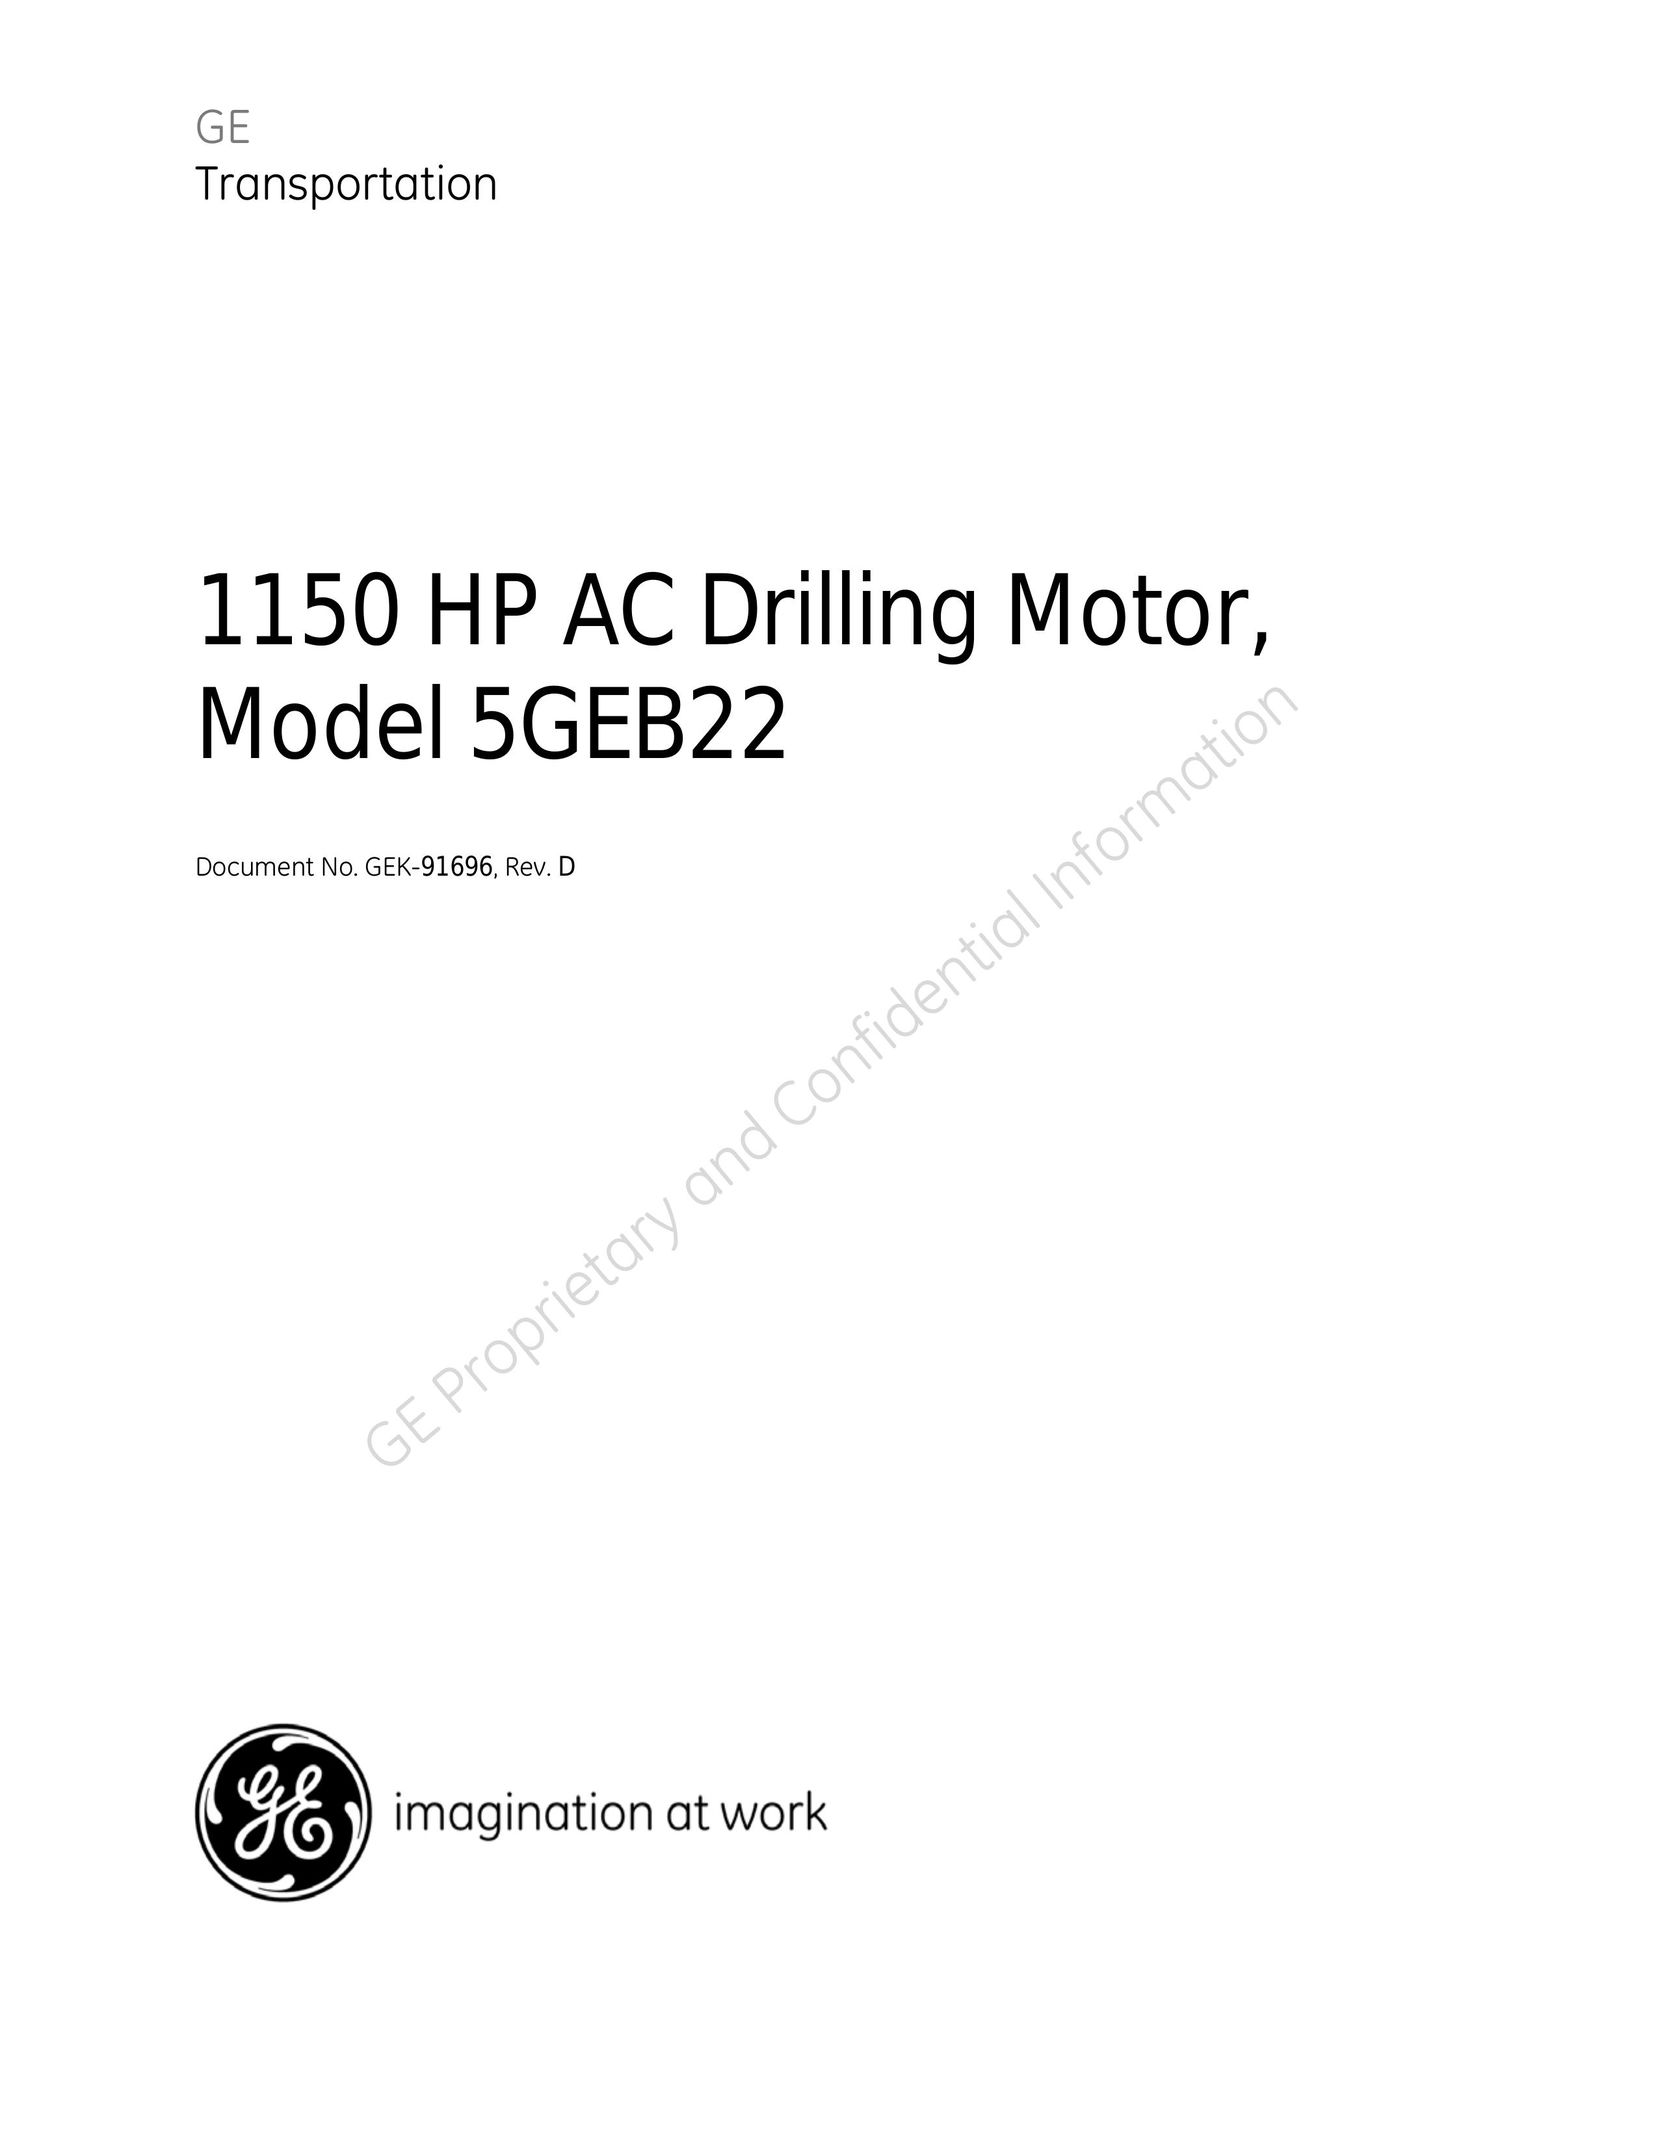 GE 5GEB22 Cordless Drill User Manual